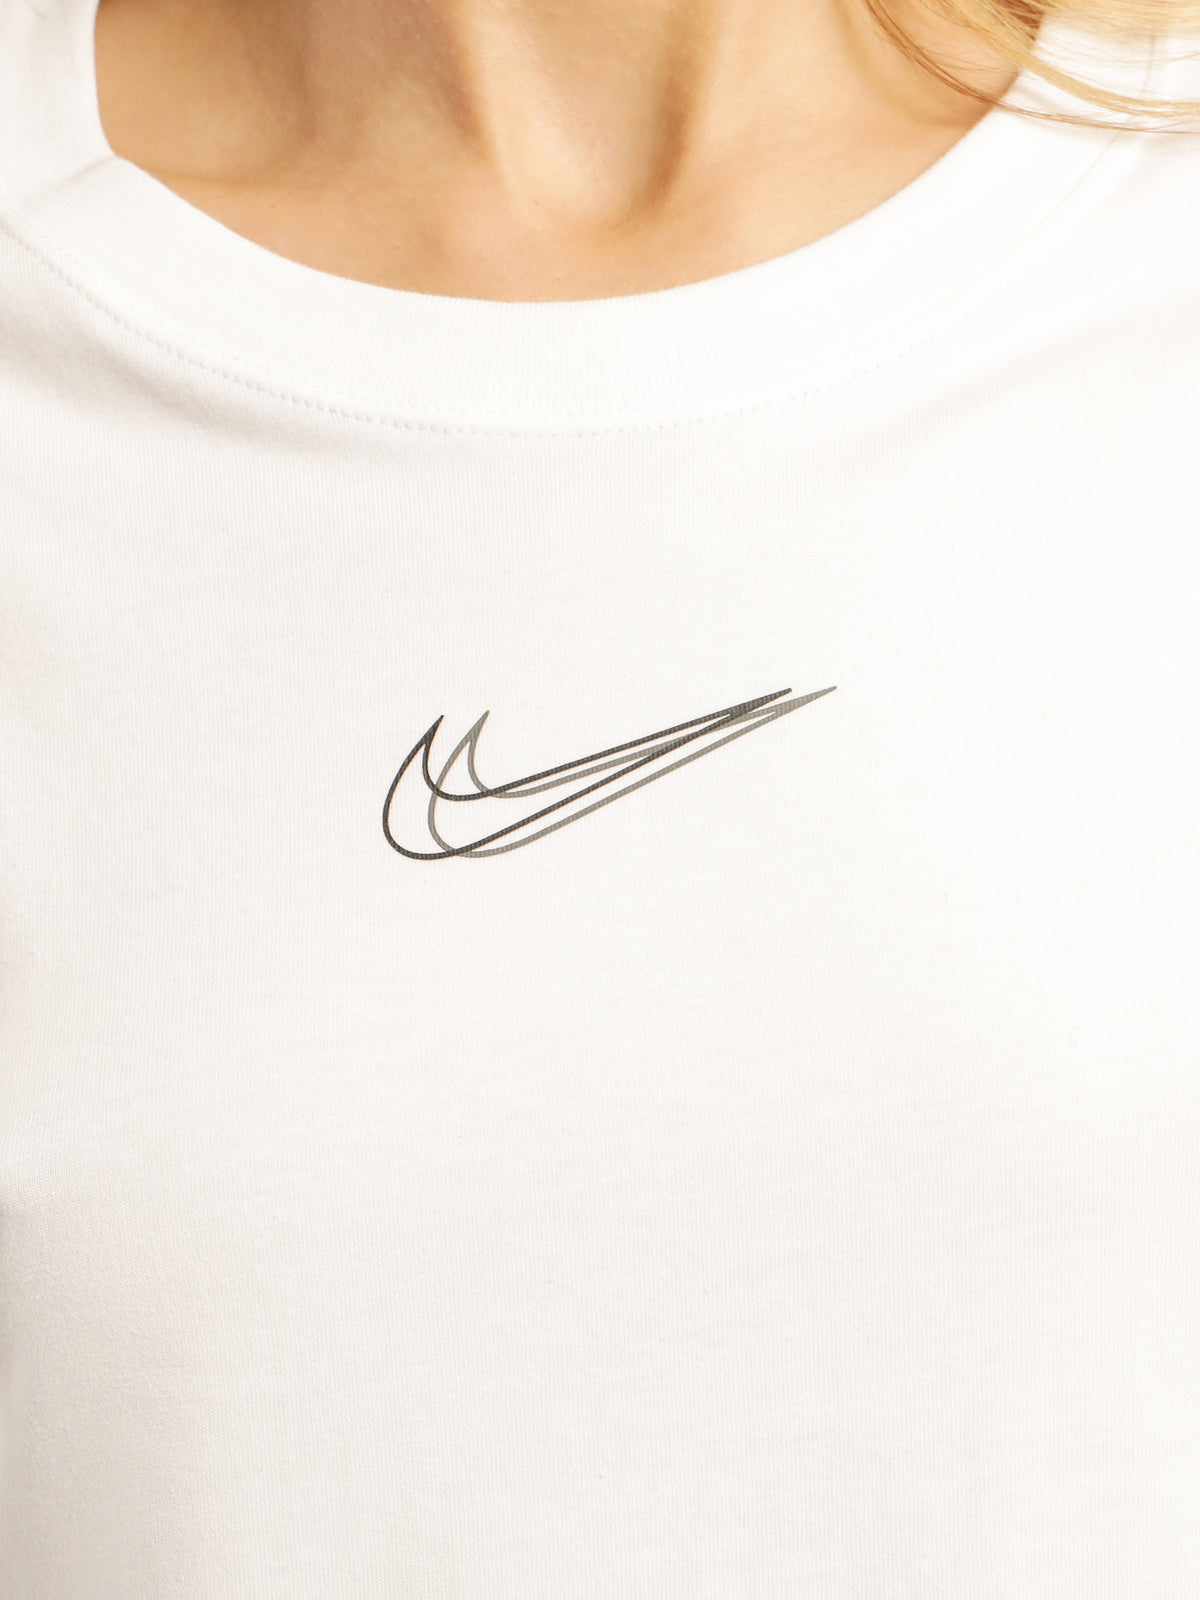 Nike Sportswear Crop Short Sleeve T-Shirt in White &amp; Black